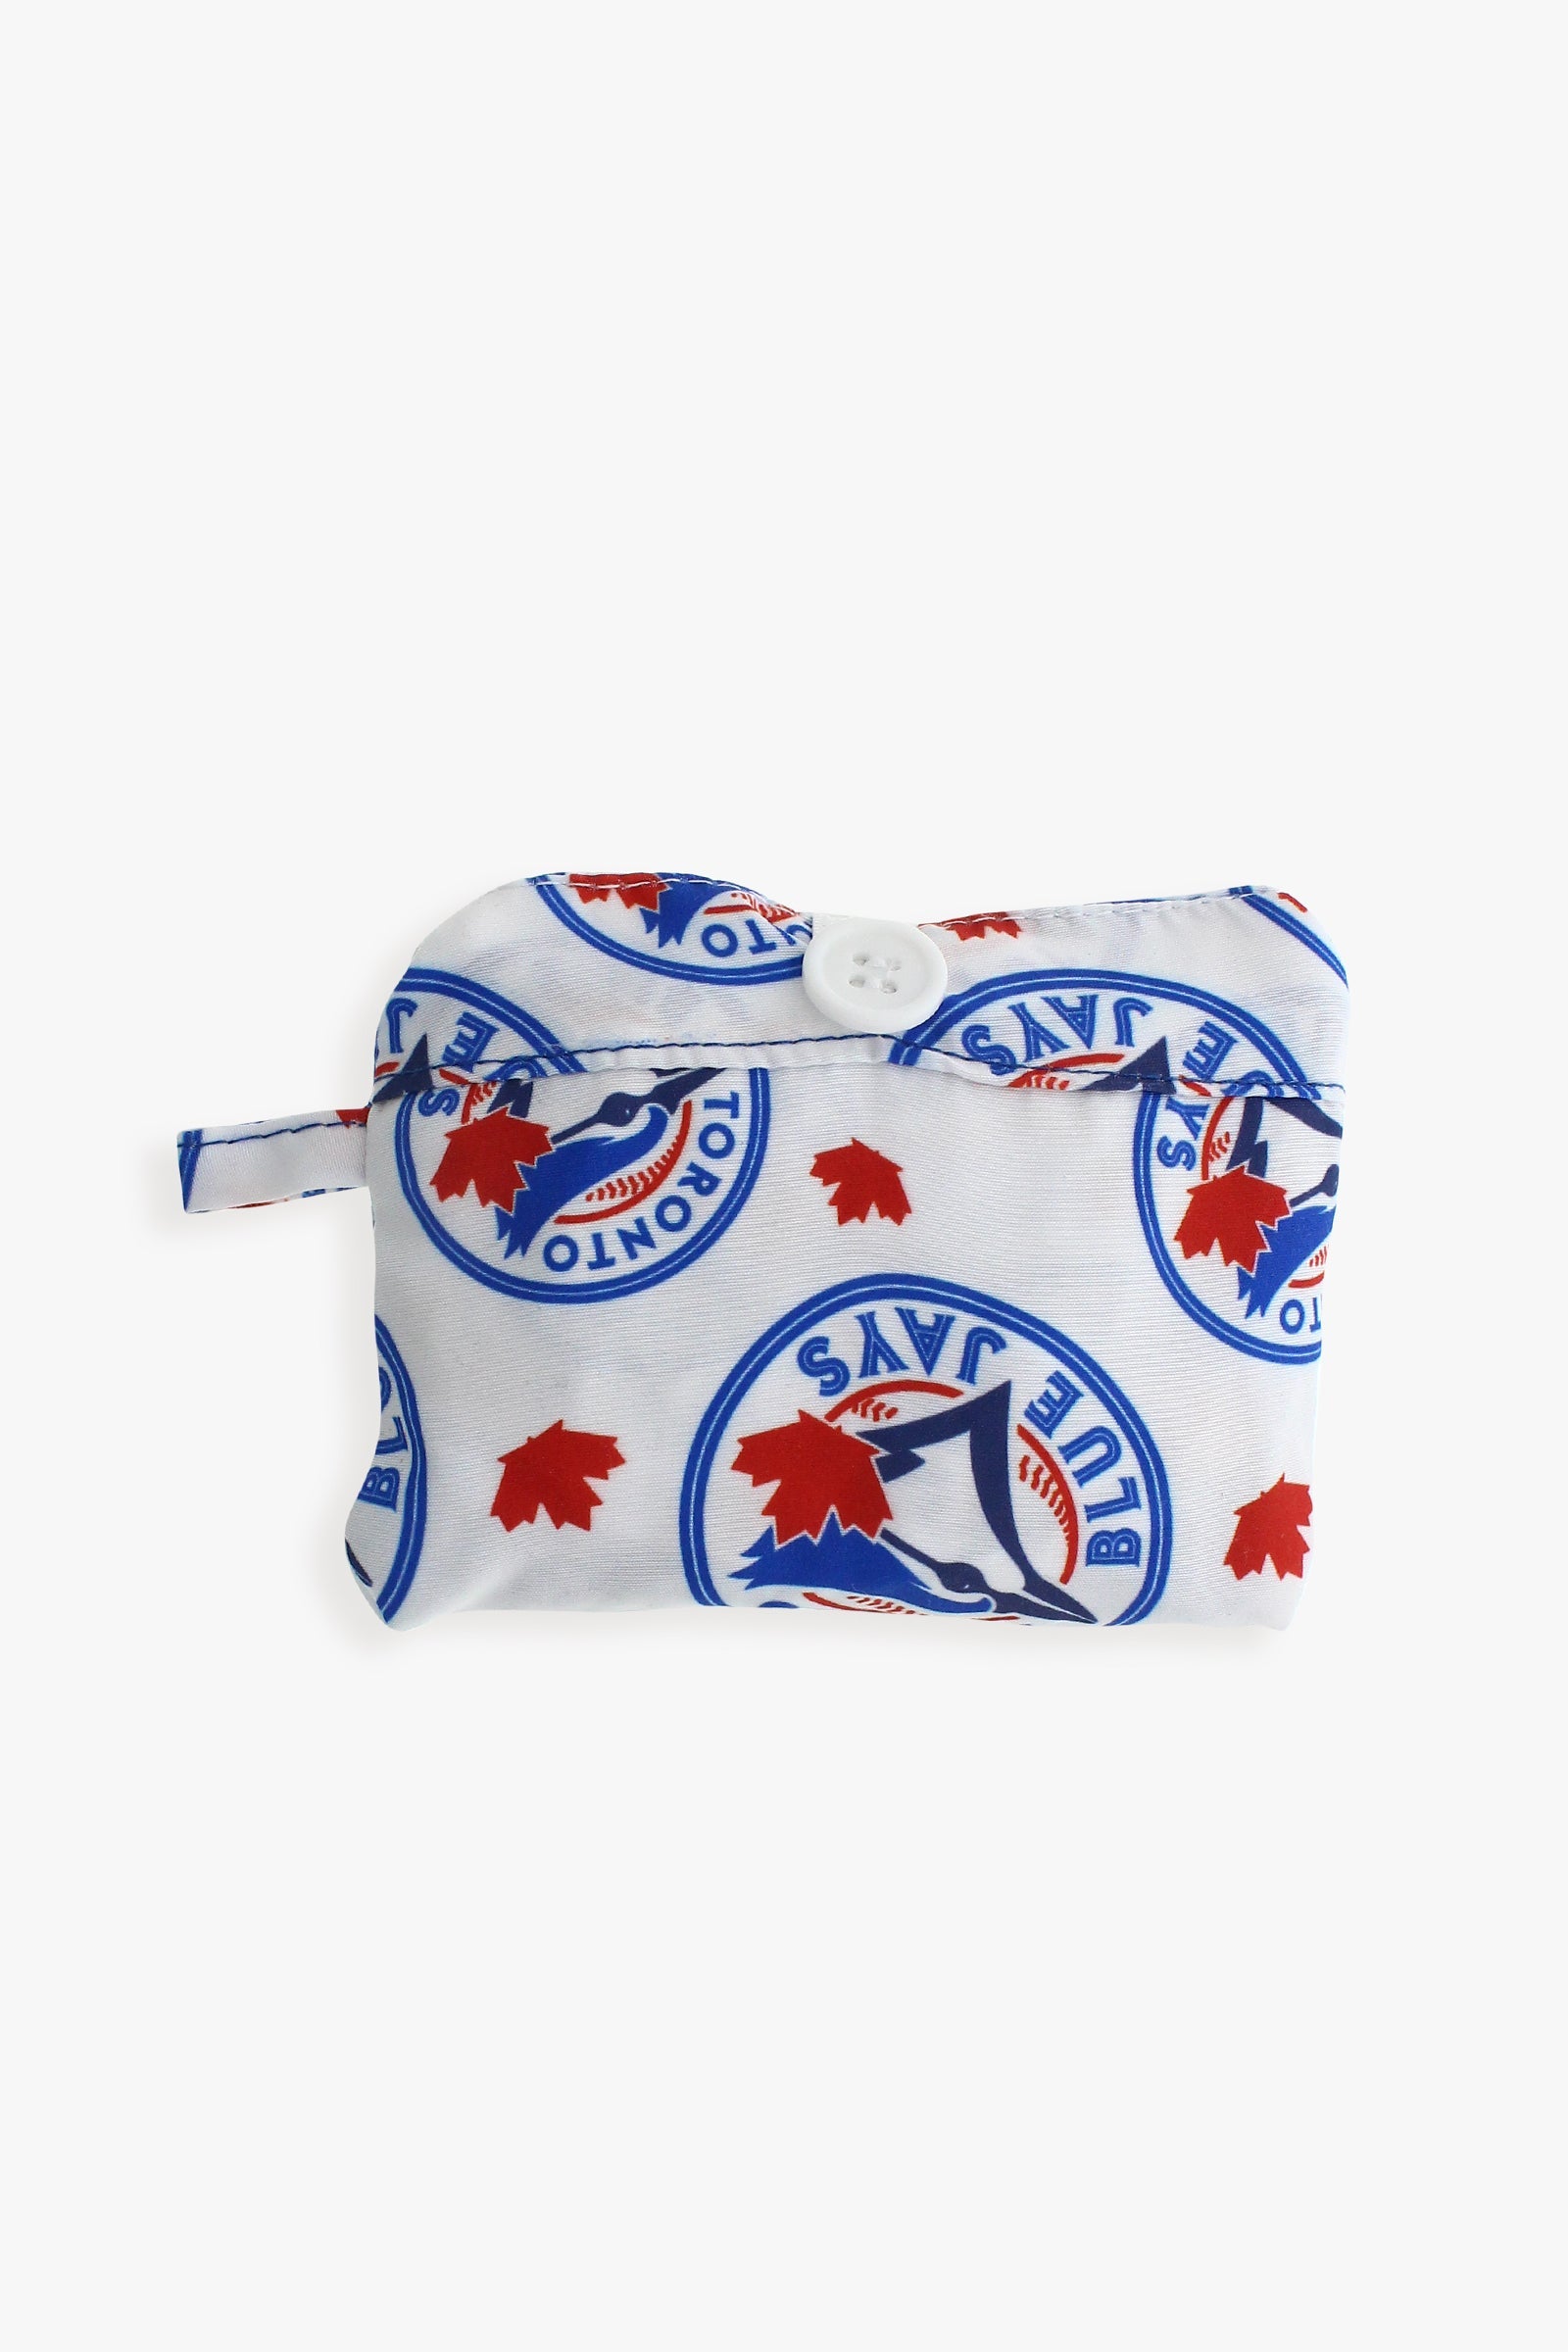 MLB Toronto Blue Jays Baby & Toddler Reversible/Packable Bucket Hat